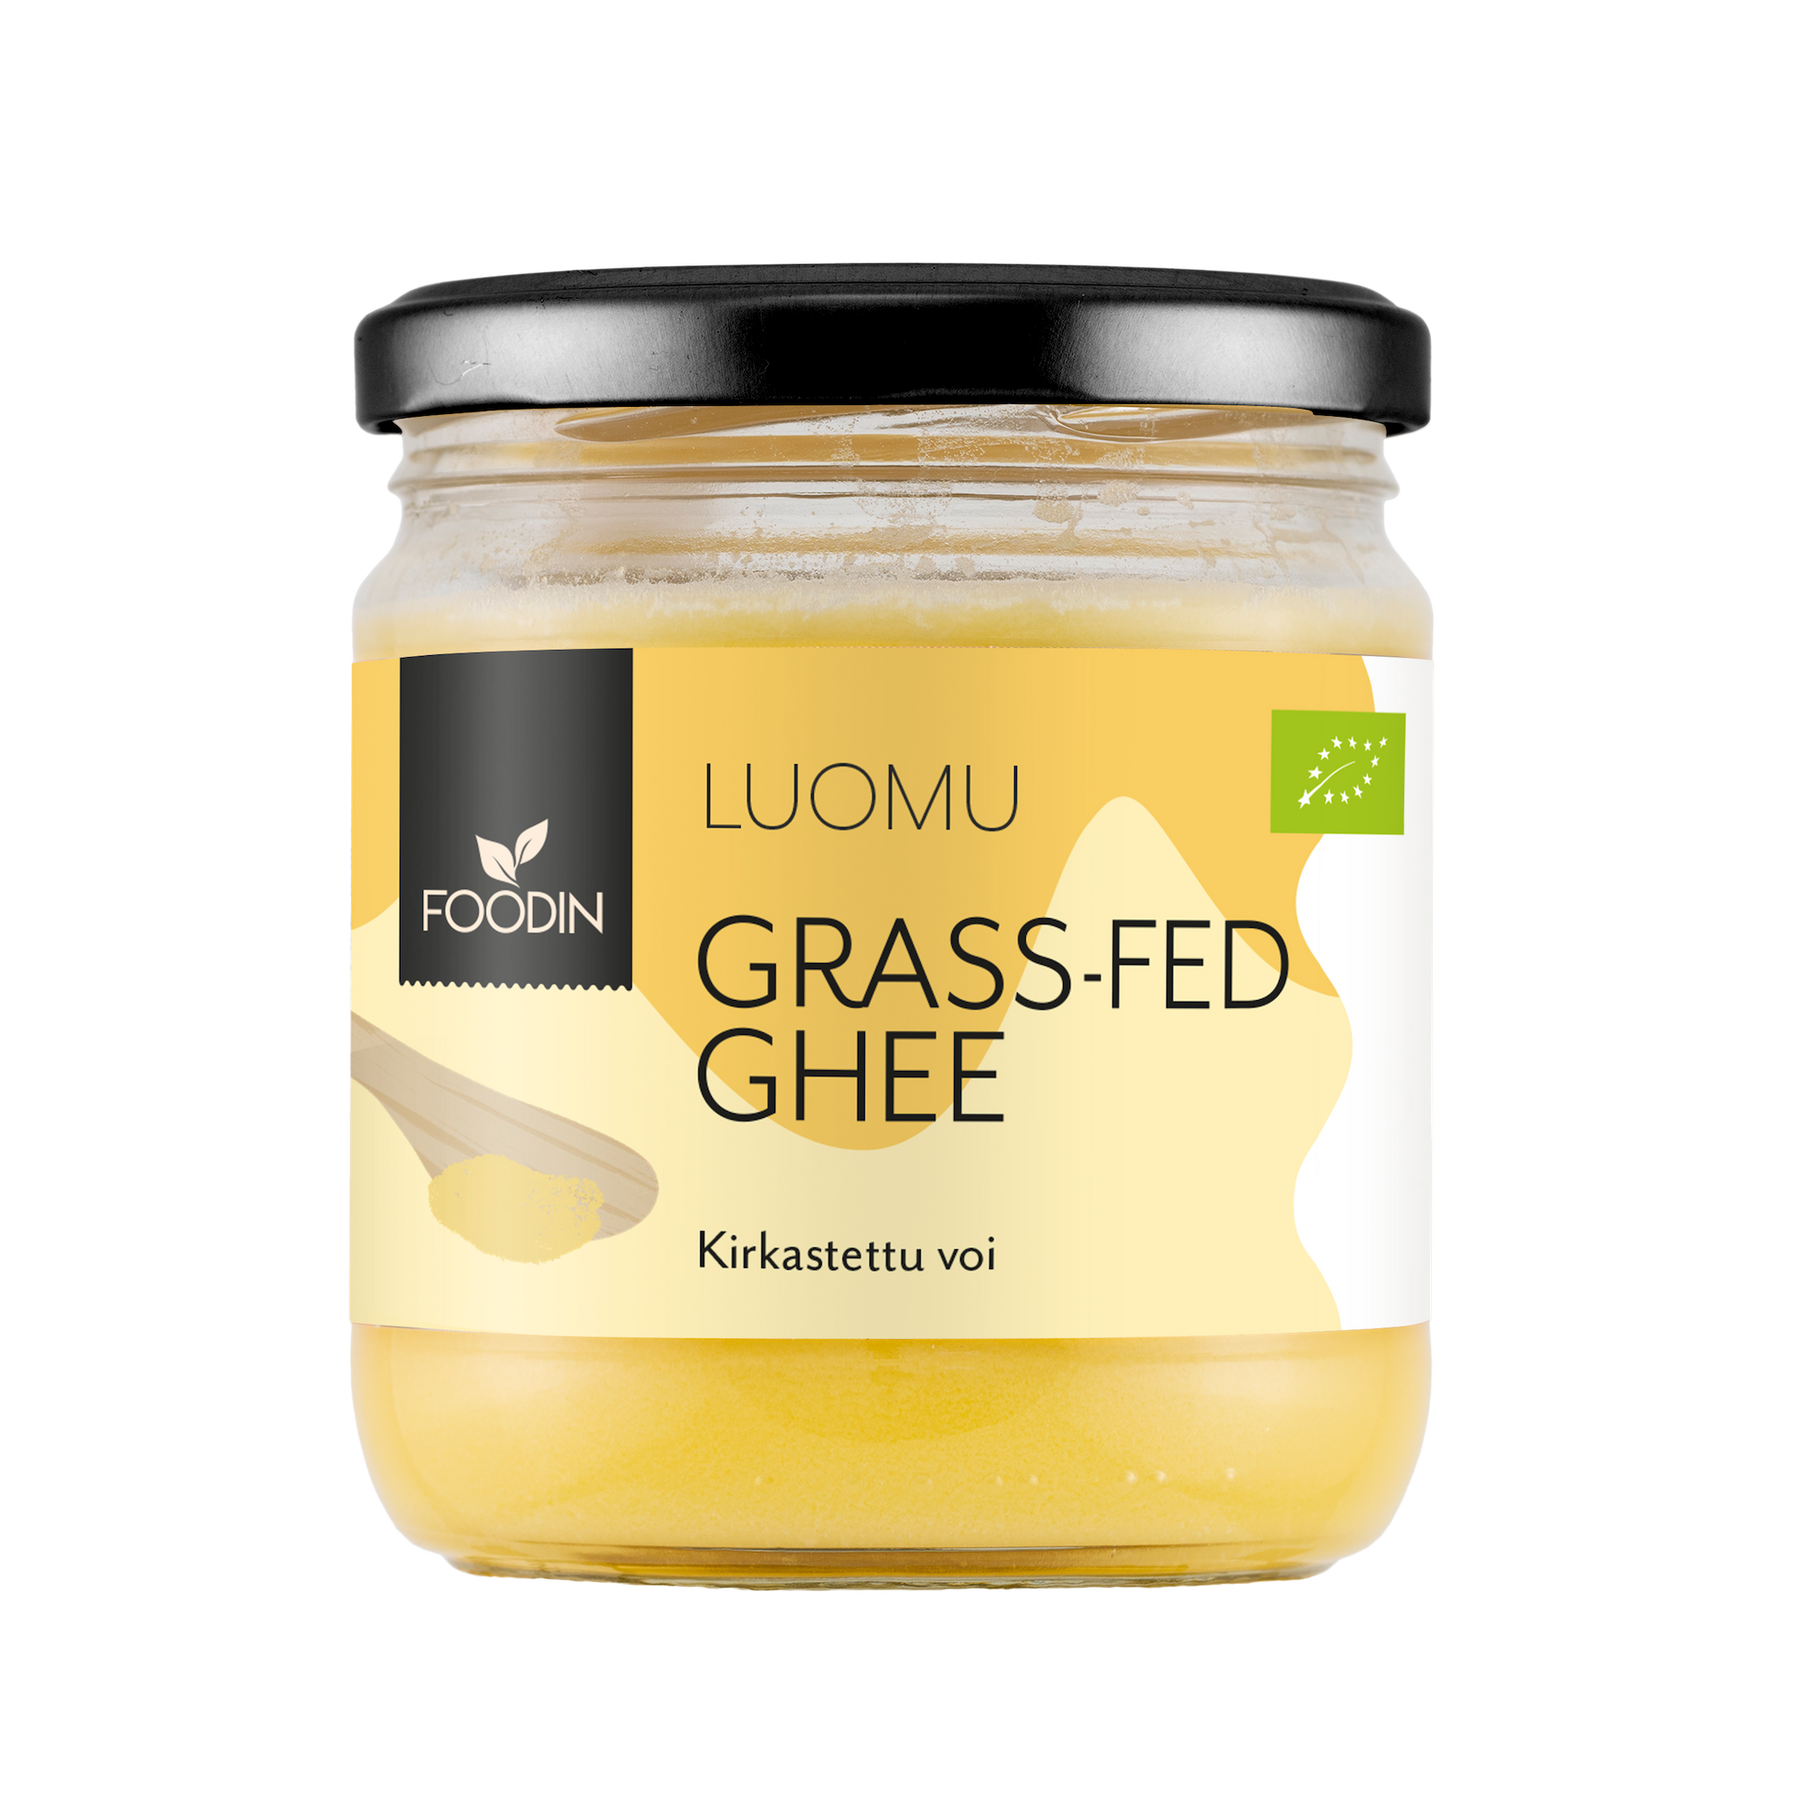 Foodin Luomu Grass-Fed Ghee 300 g